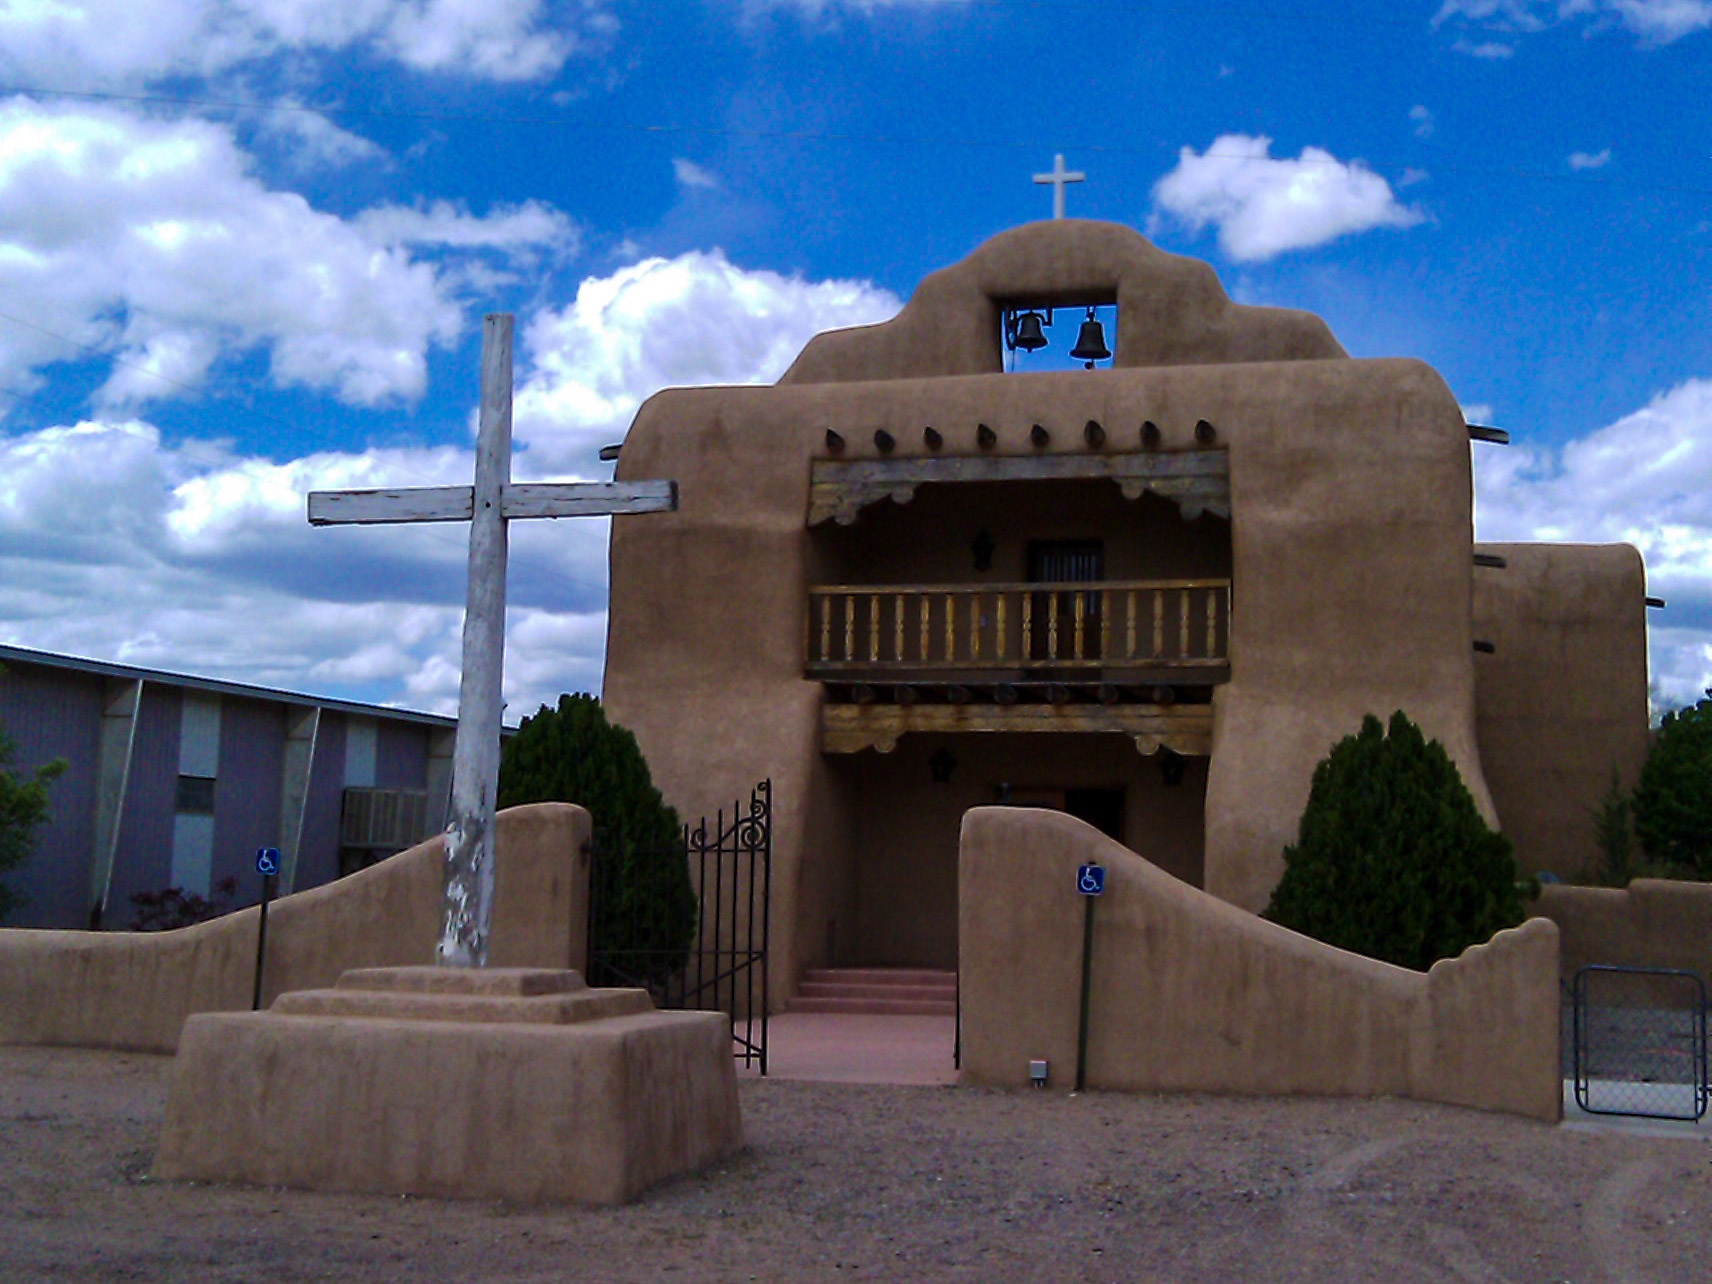 Abiquiú, New Mexico